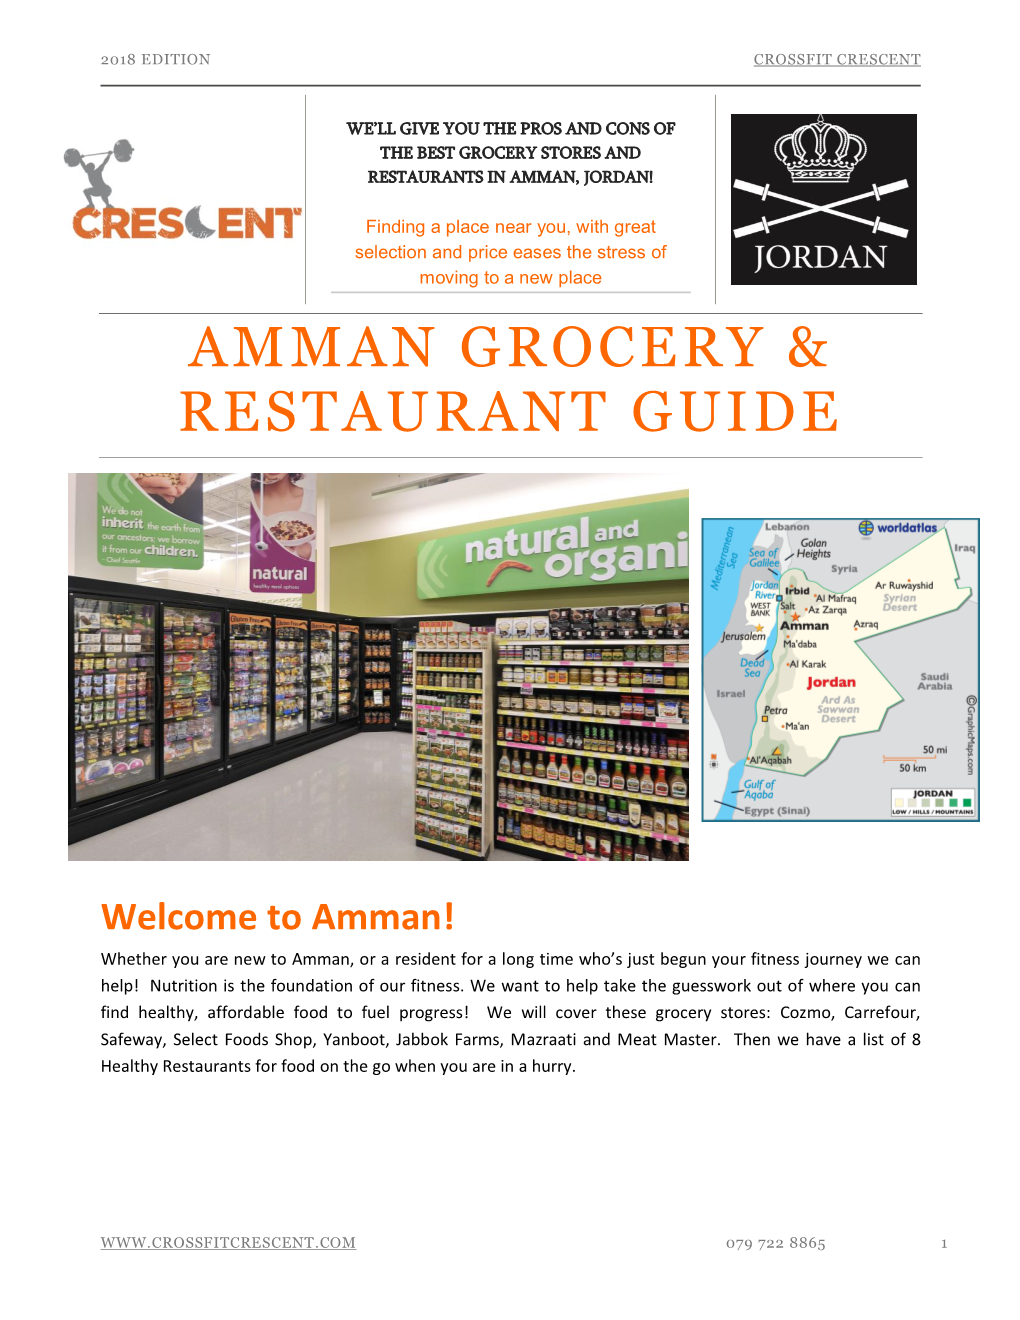 Amman Grocery & Restaurant Guide